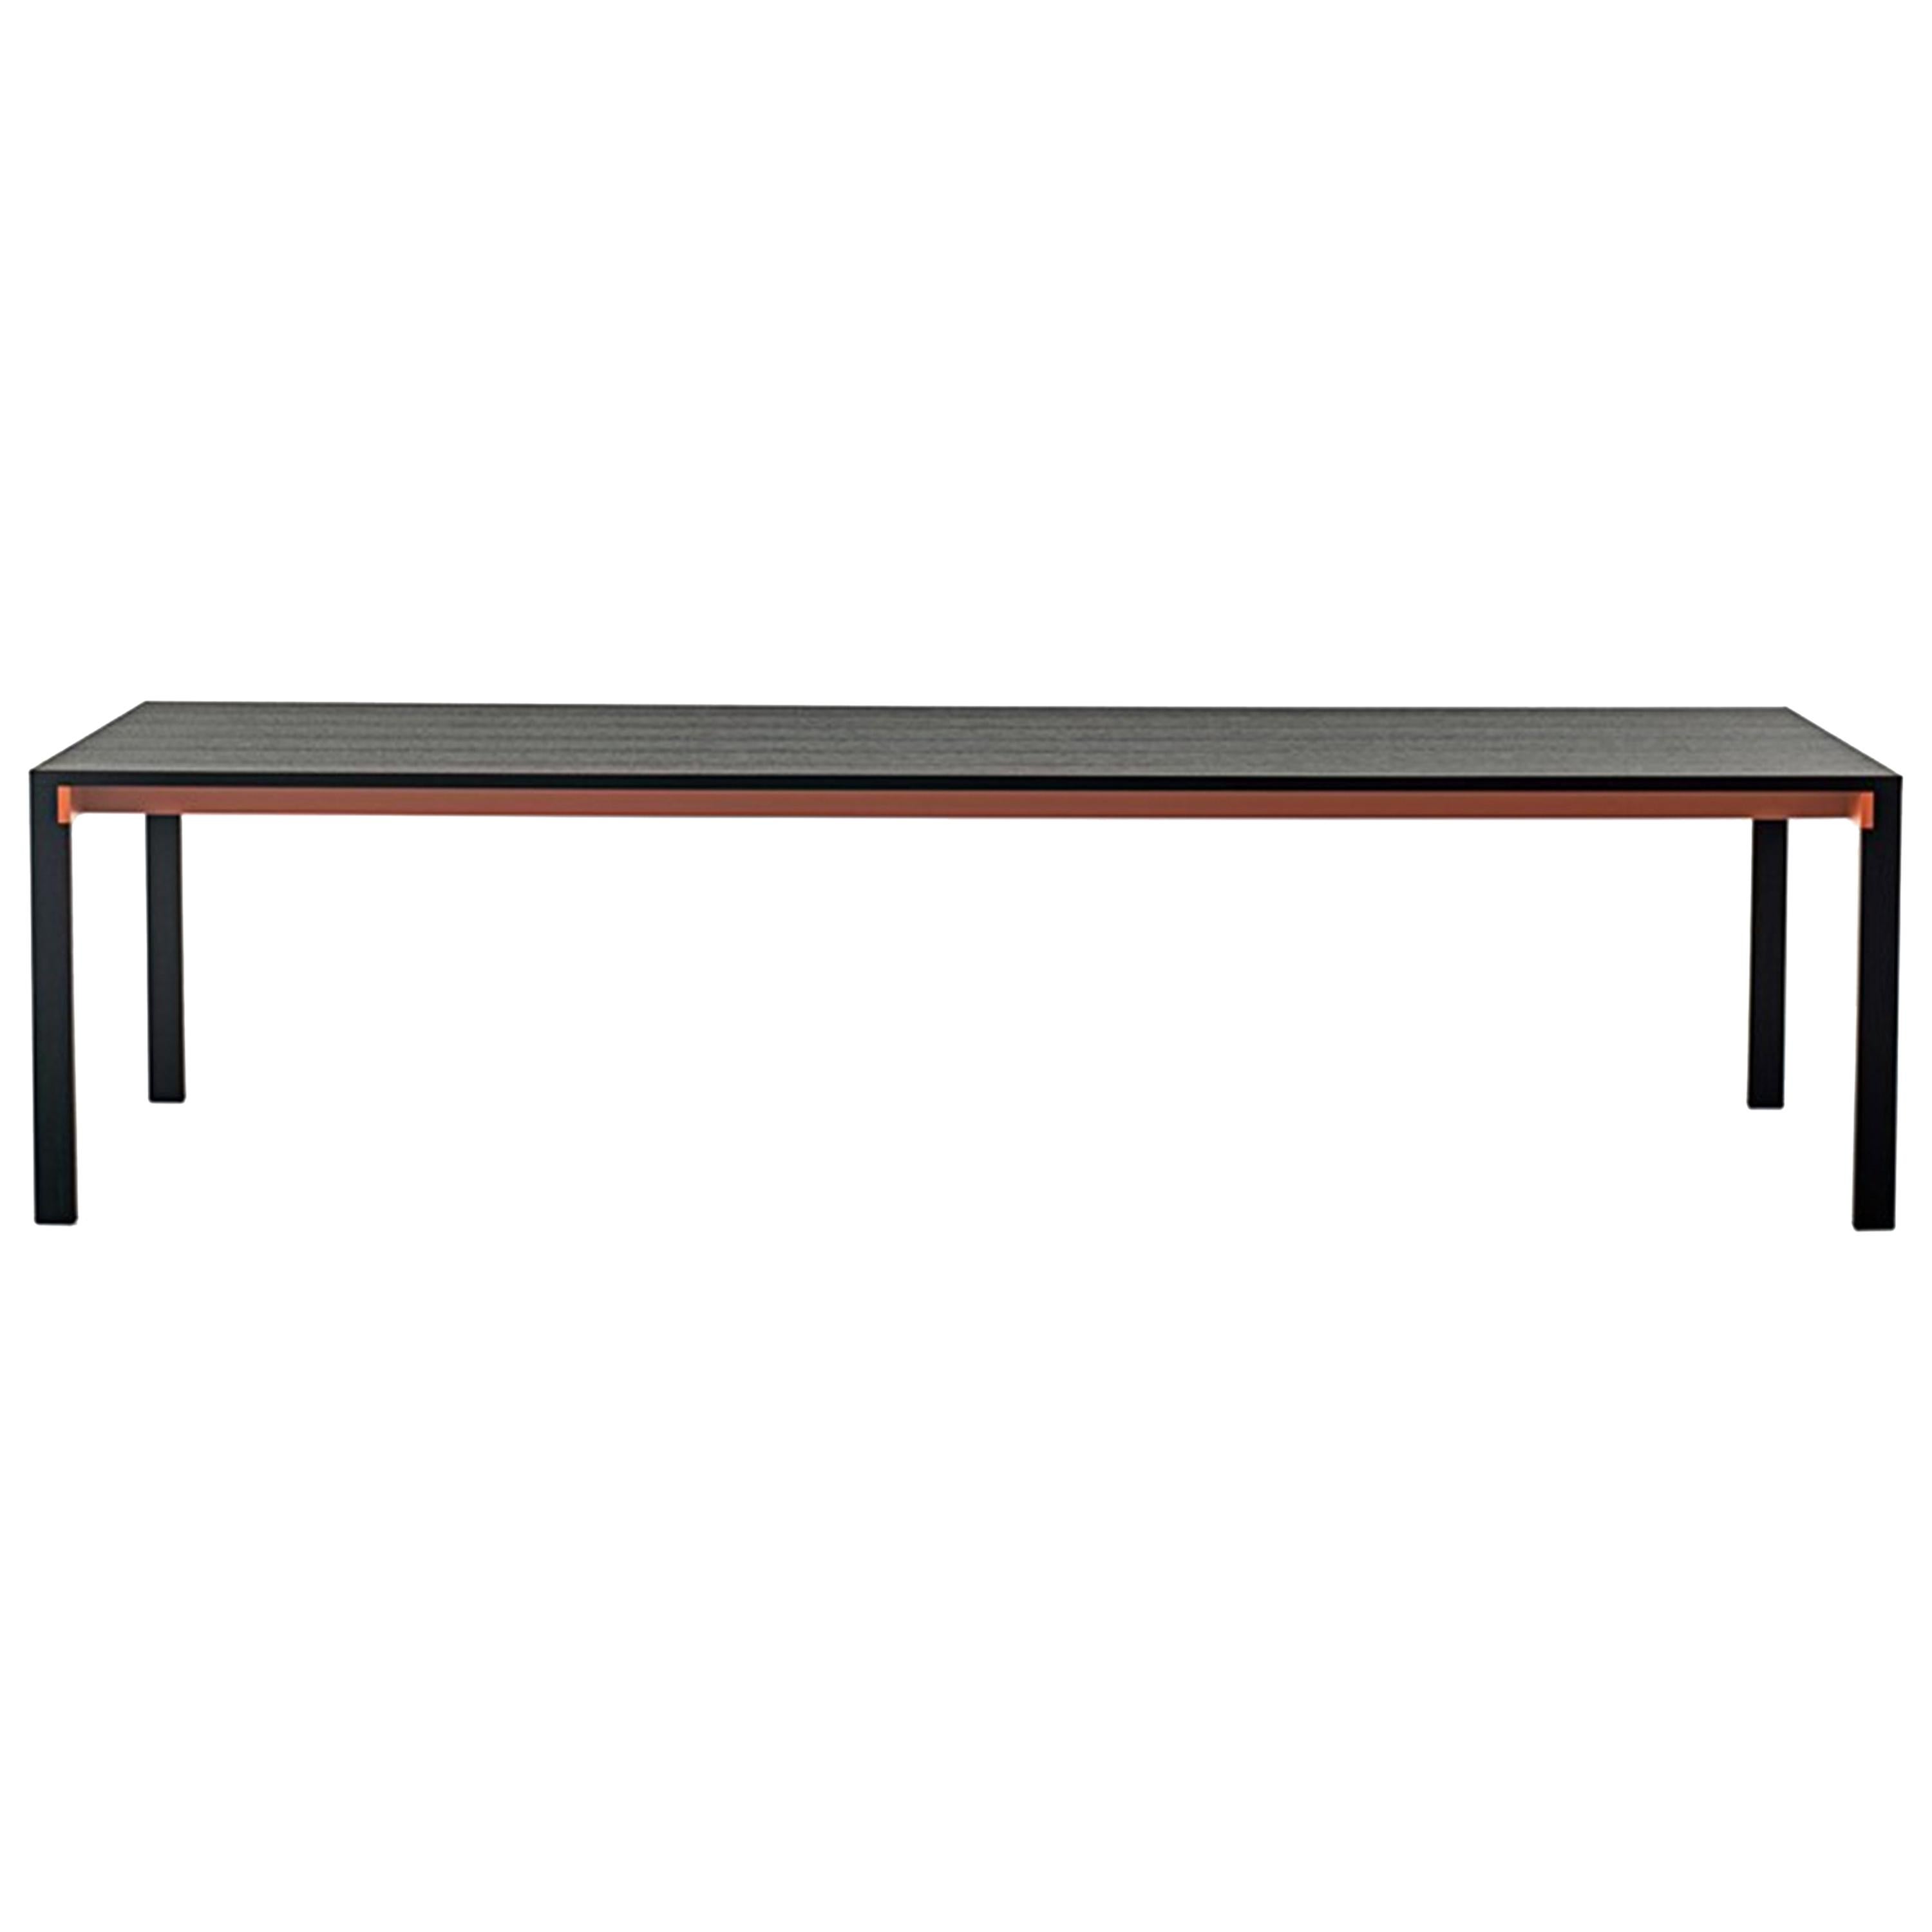 Desalto Beam Wood Top Table Designed by Mario Ferrarini